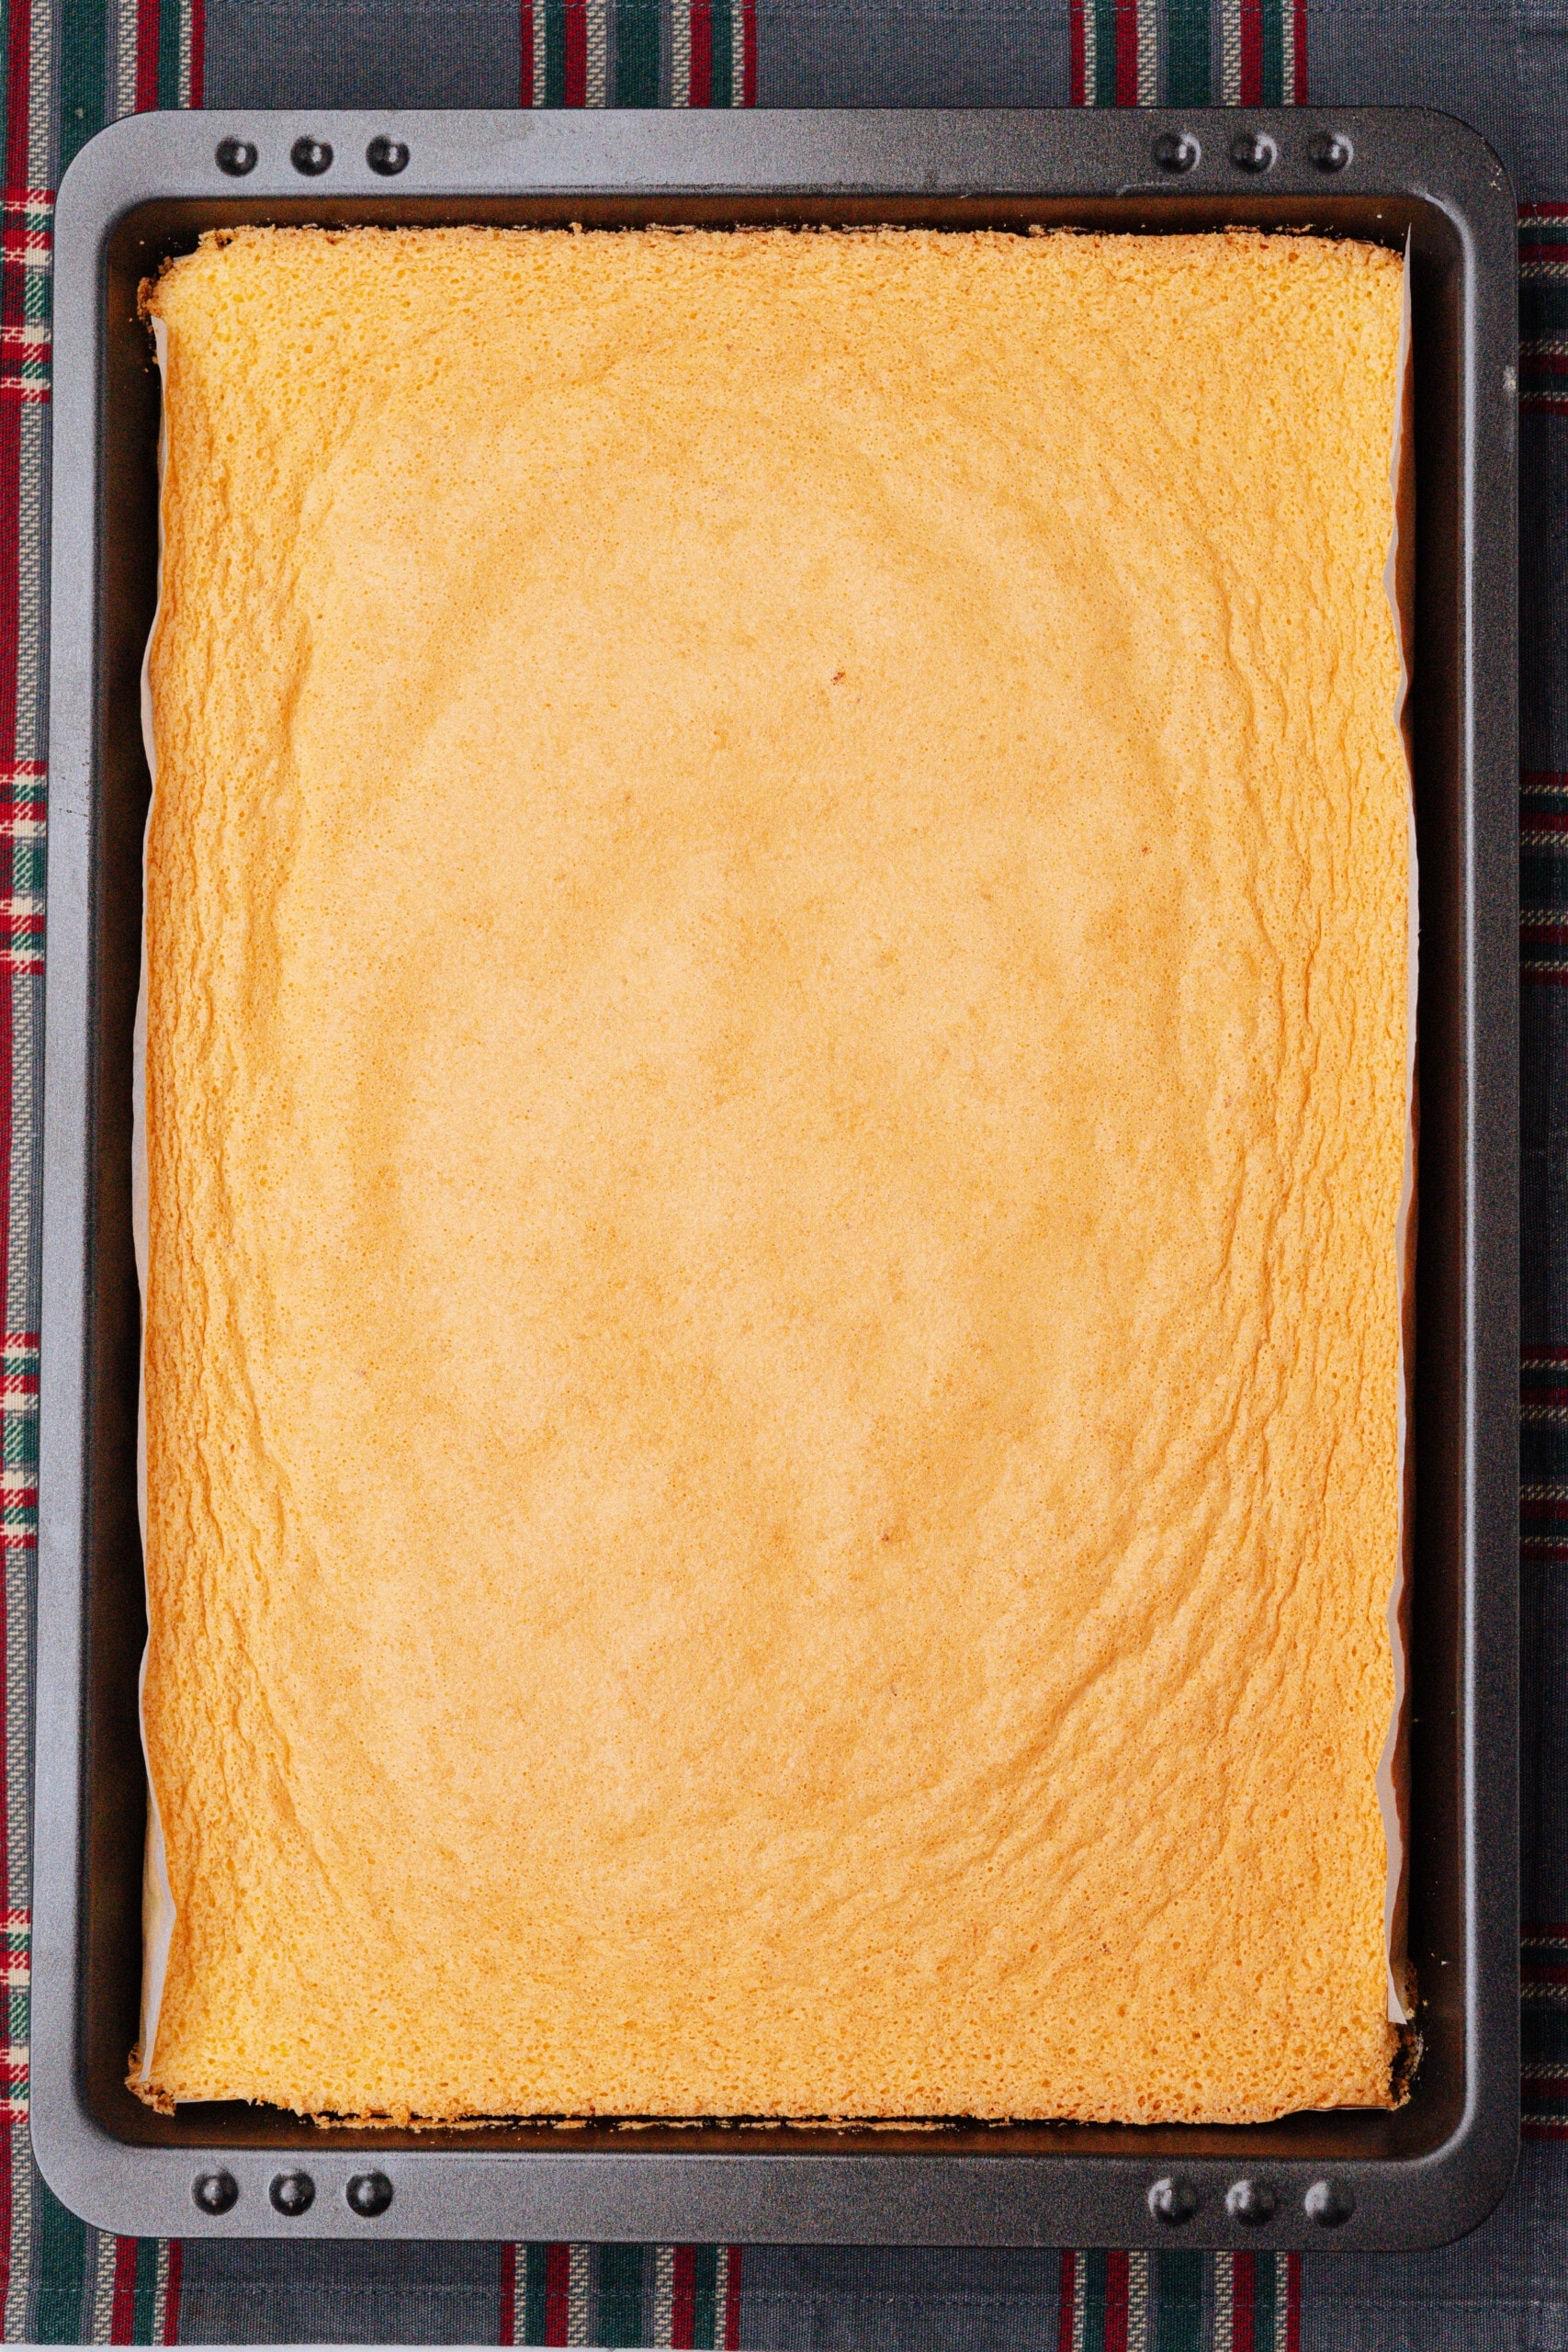 baked pistachio lemon roll cake in a pan